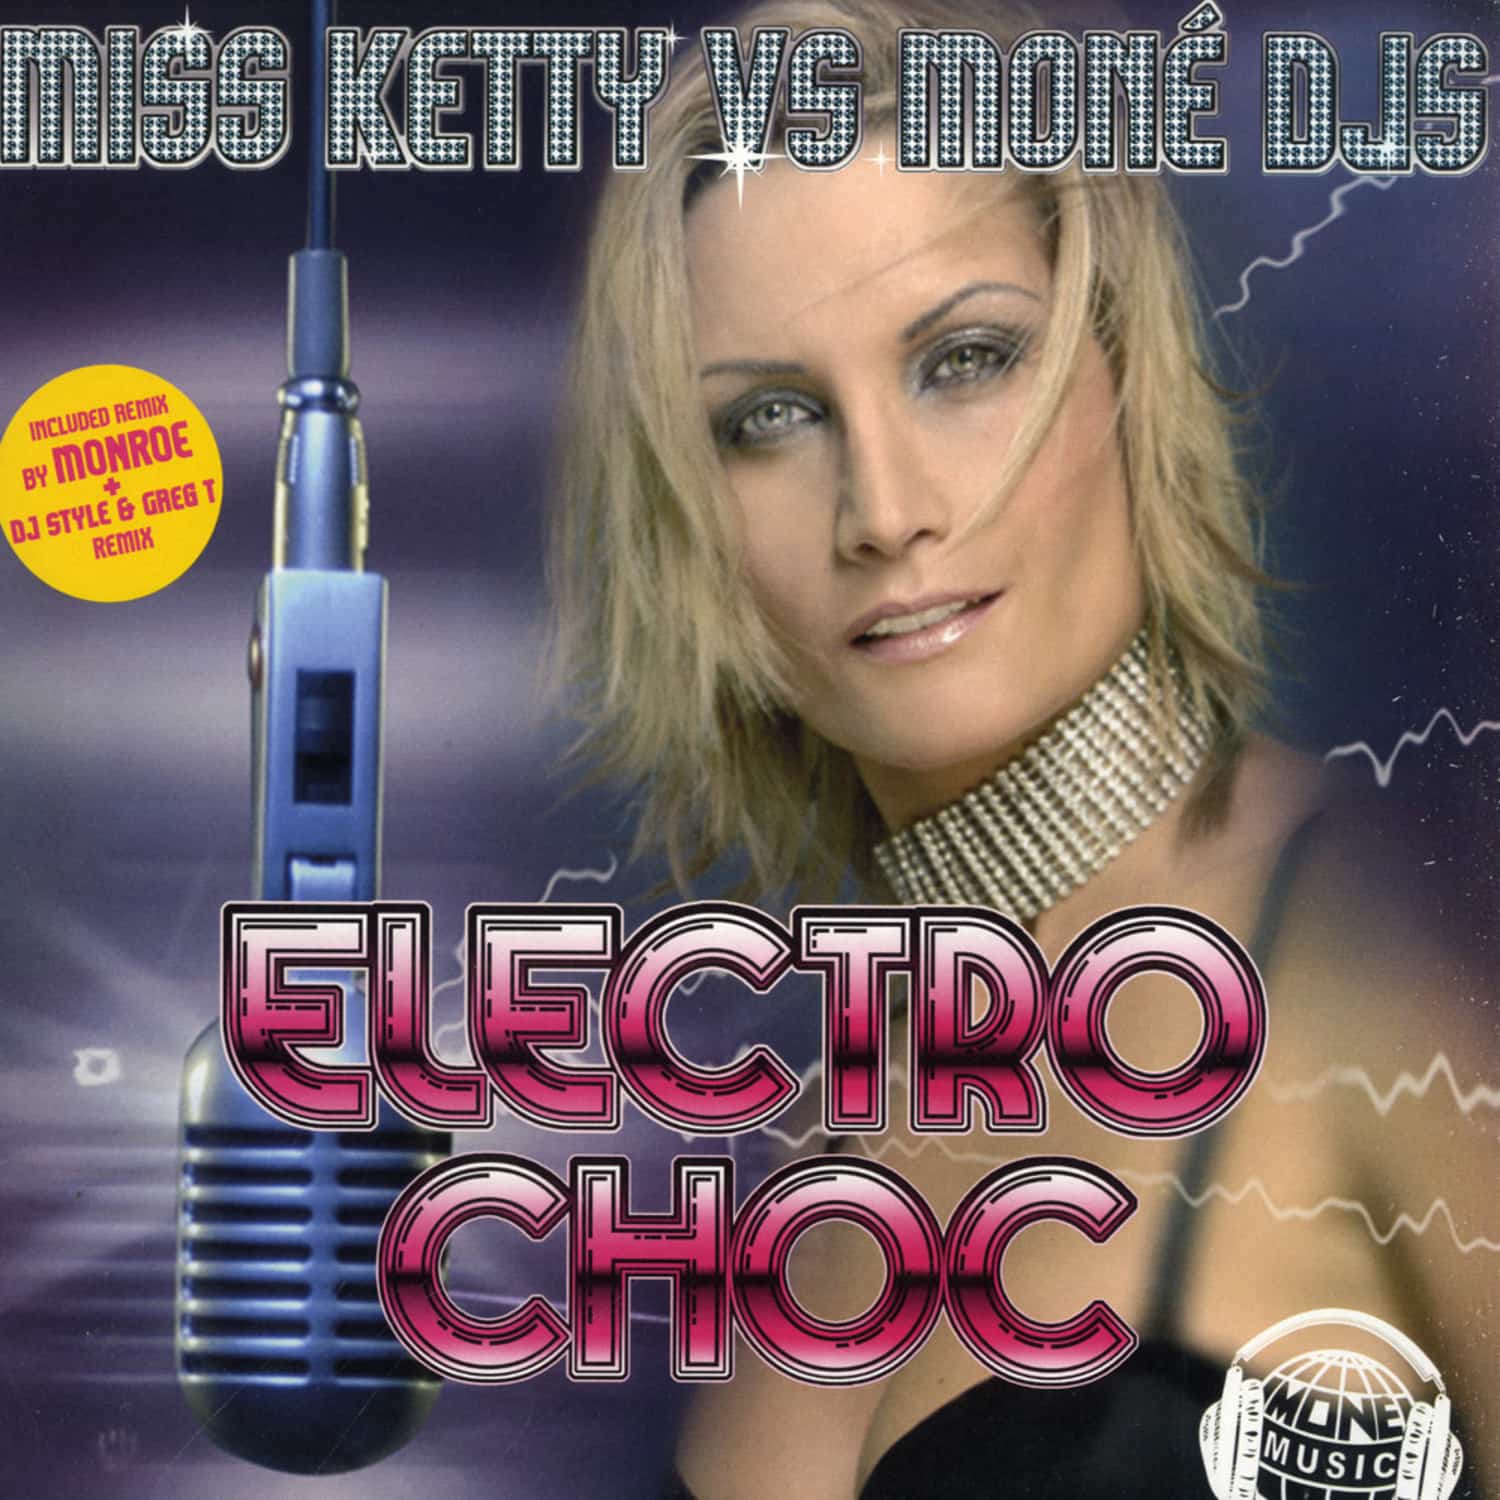 Miss Ketty vs. Mone DJs - ELECTRO CHOC